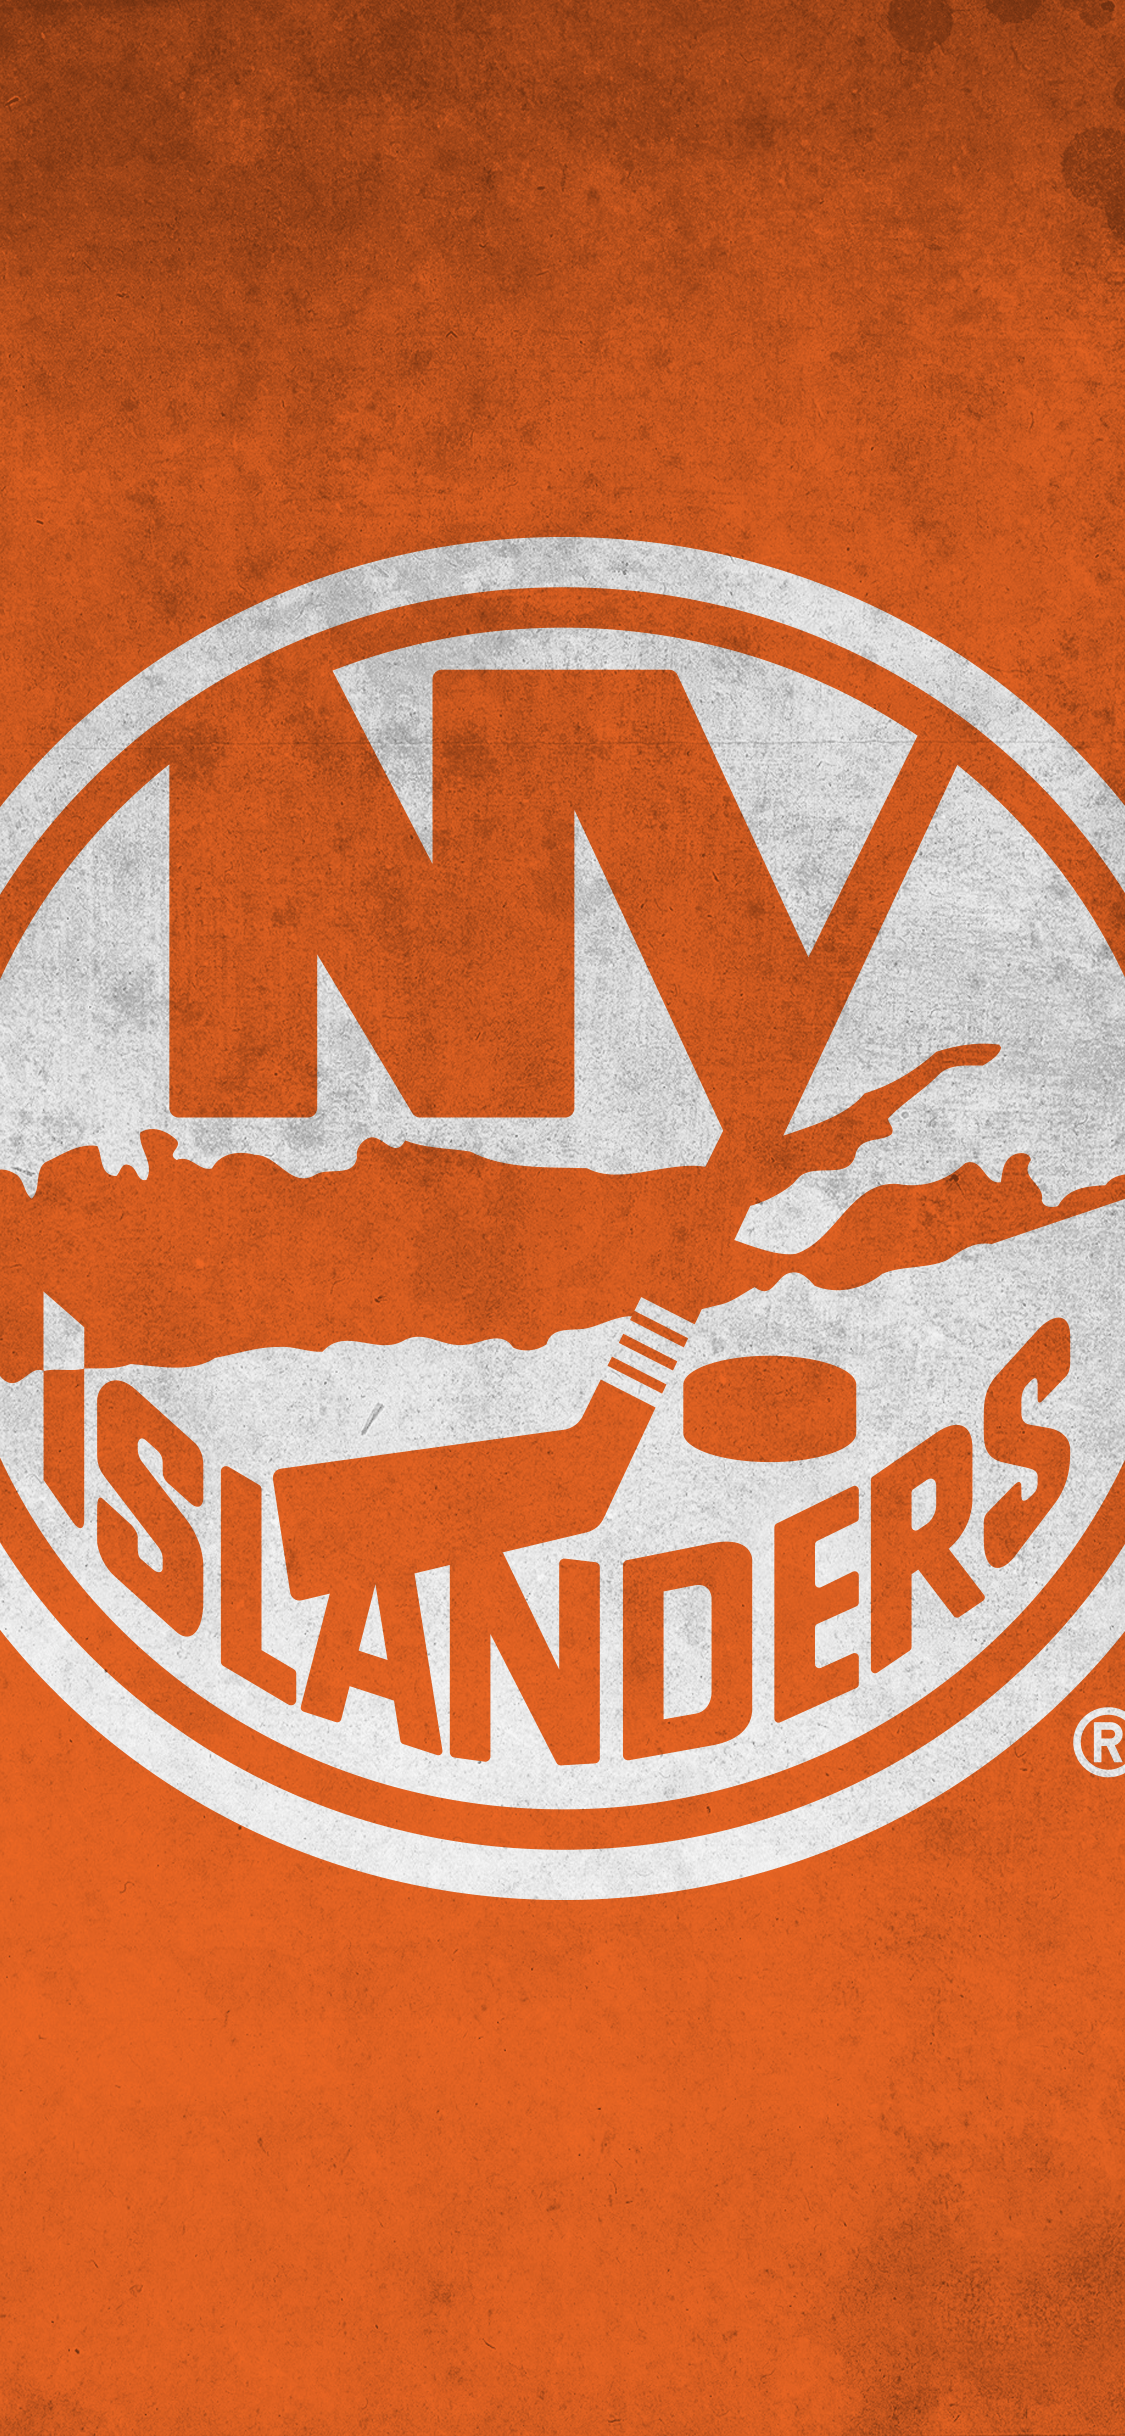 2023 New York Islanders wallpaper – Pro Sports Backgrounds